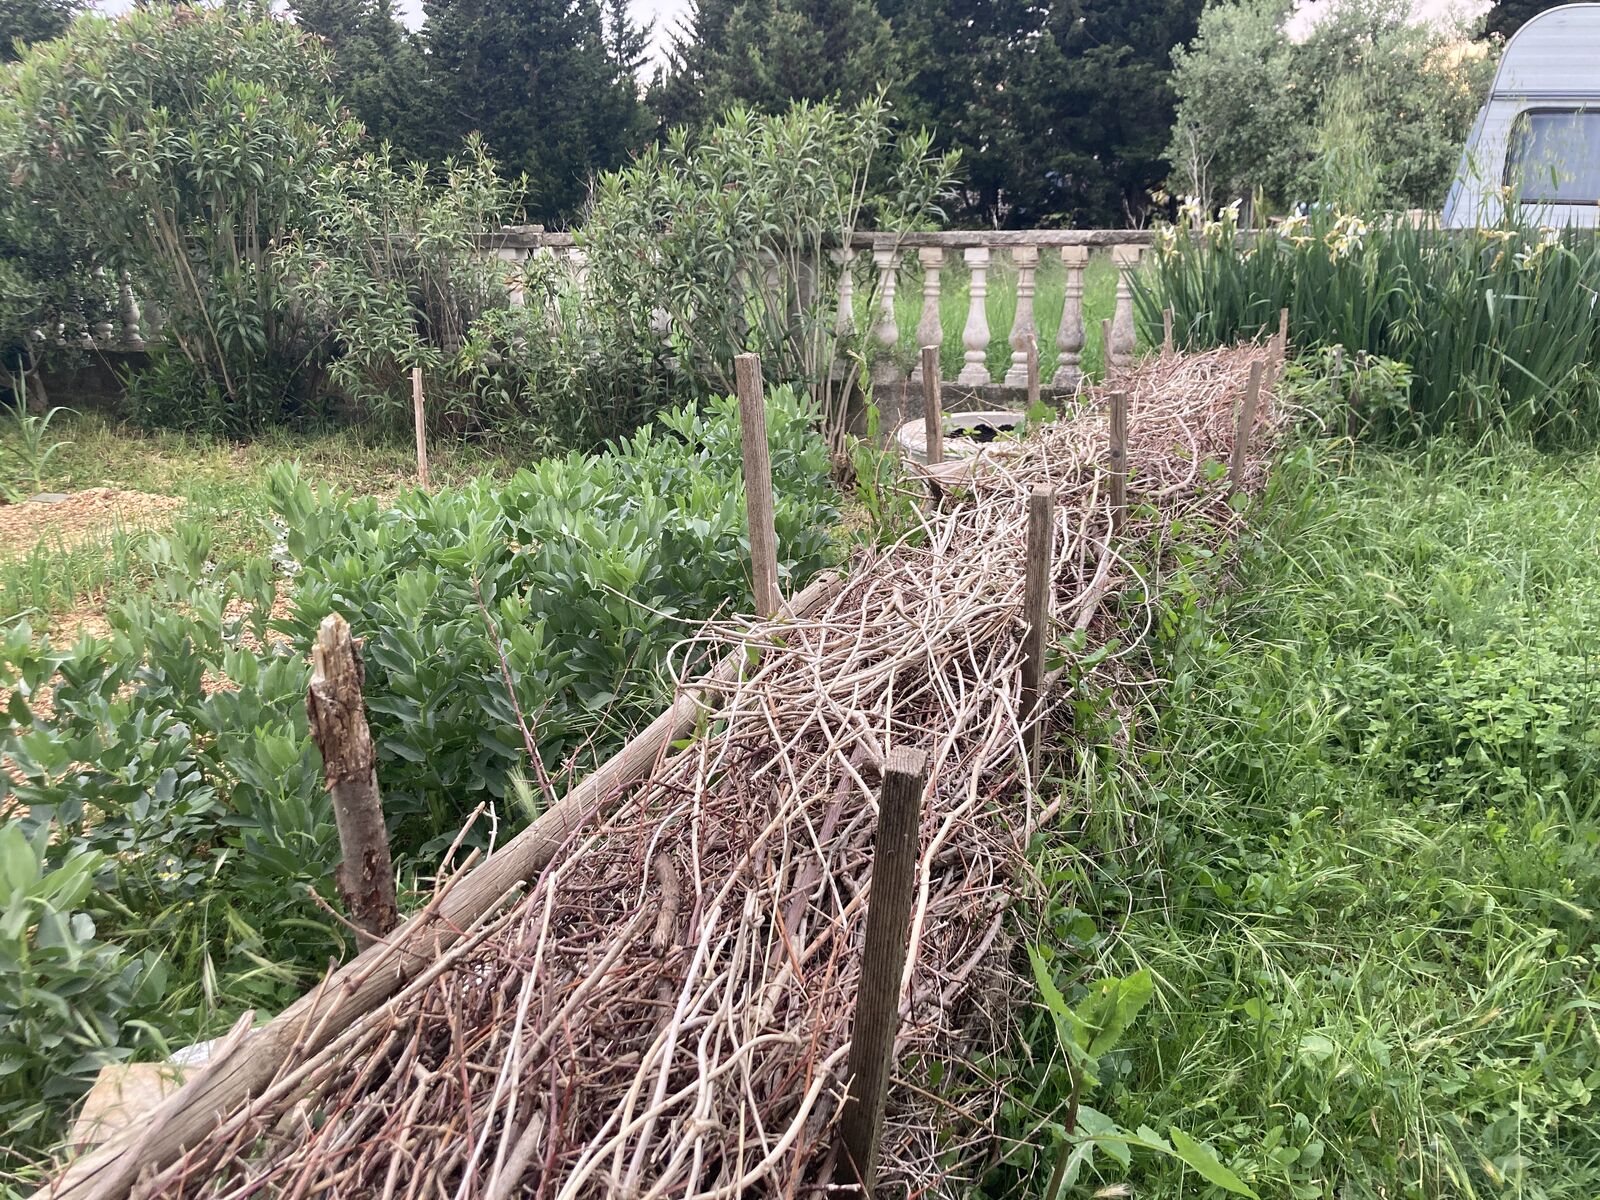 Finished Benjes hedge as a border for beds